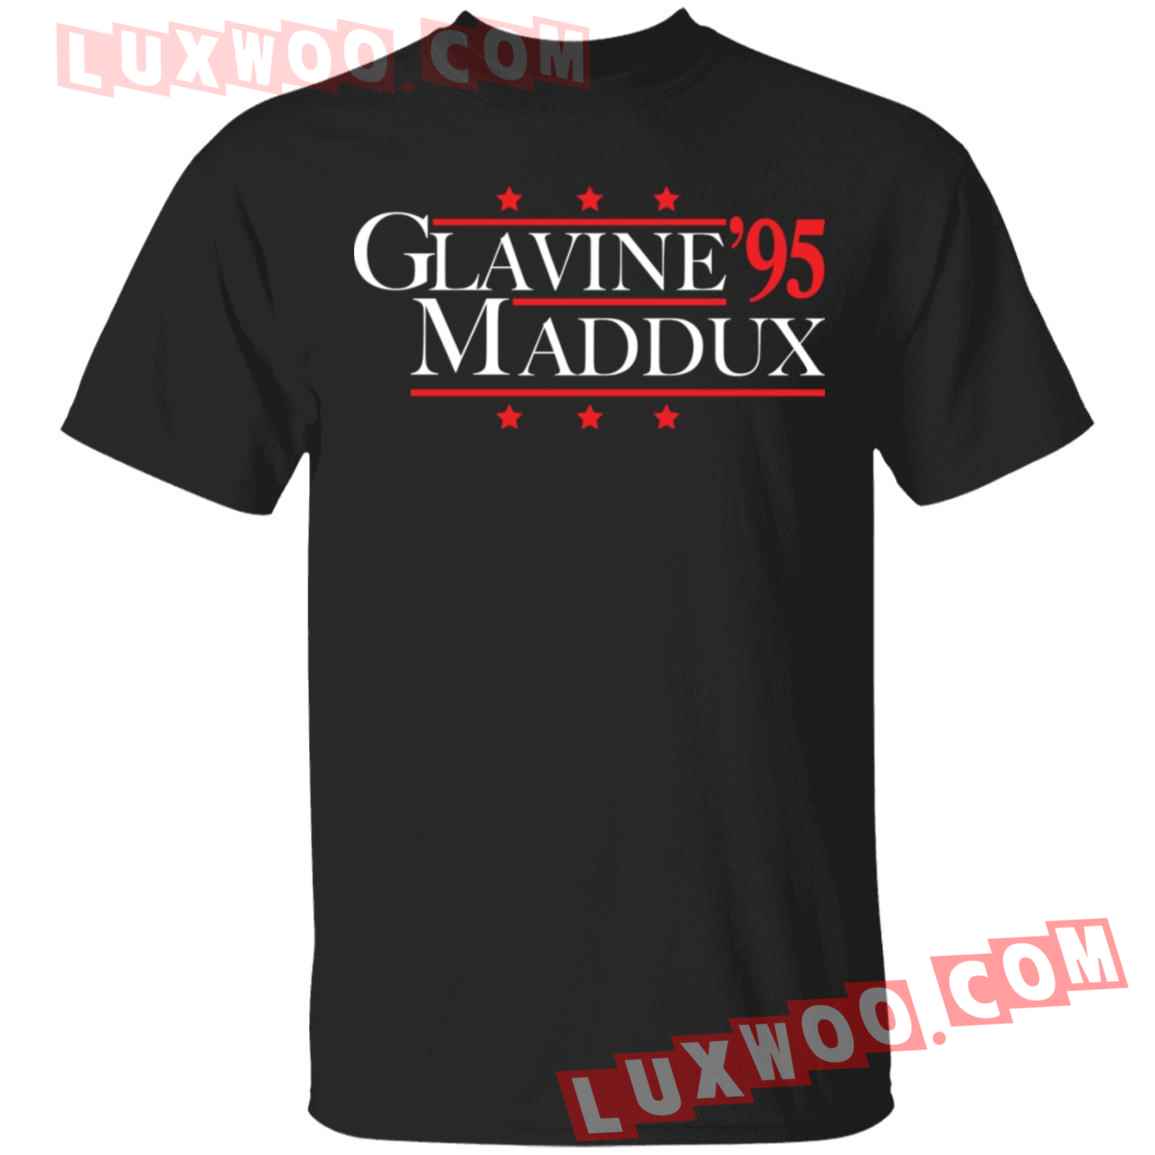 Glavine Maddux 95 Shirt